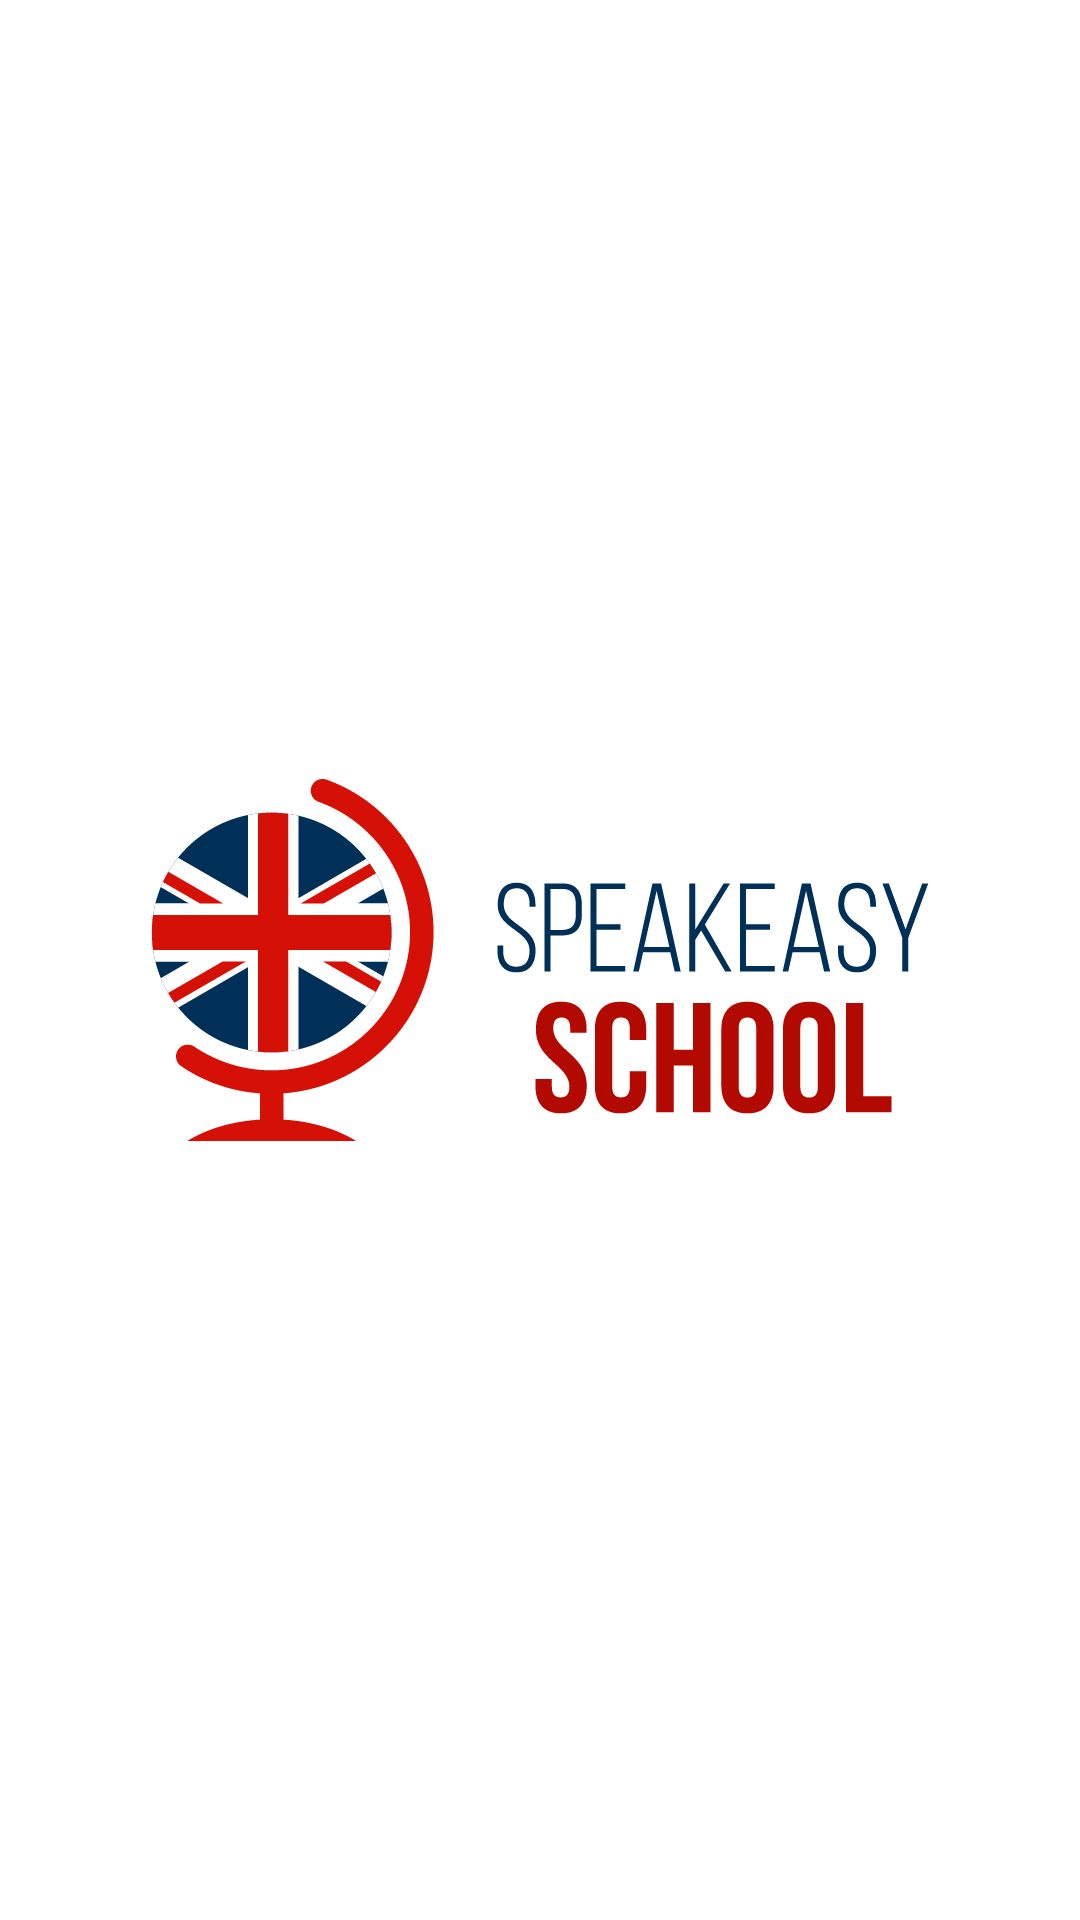 Speakeasy School